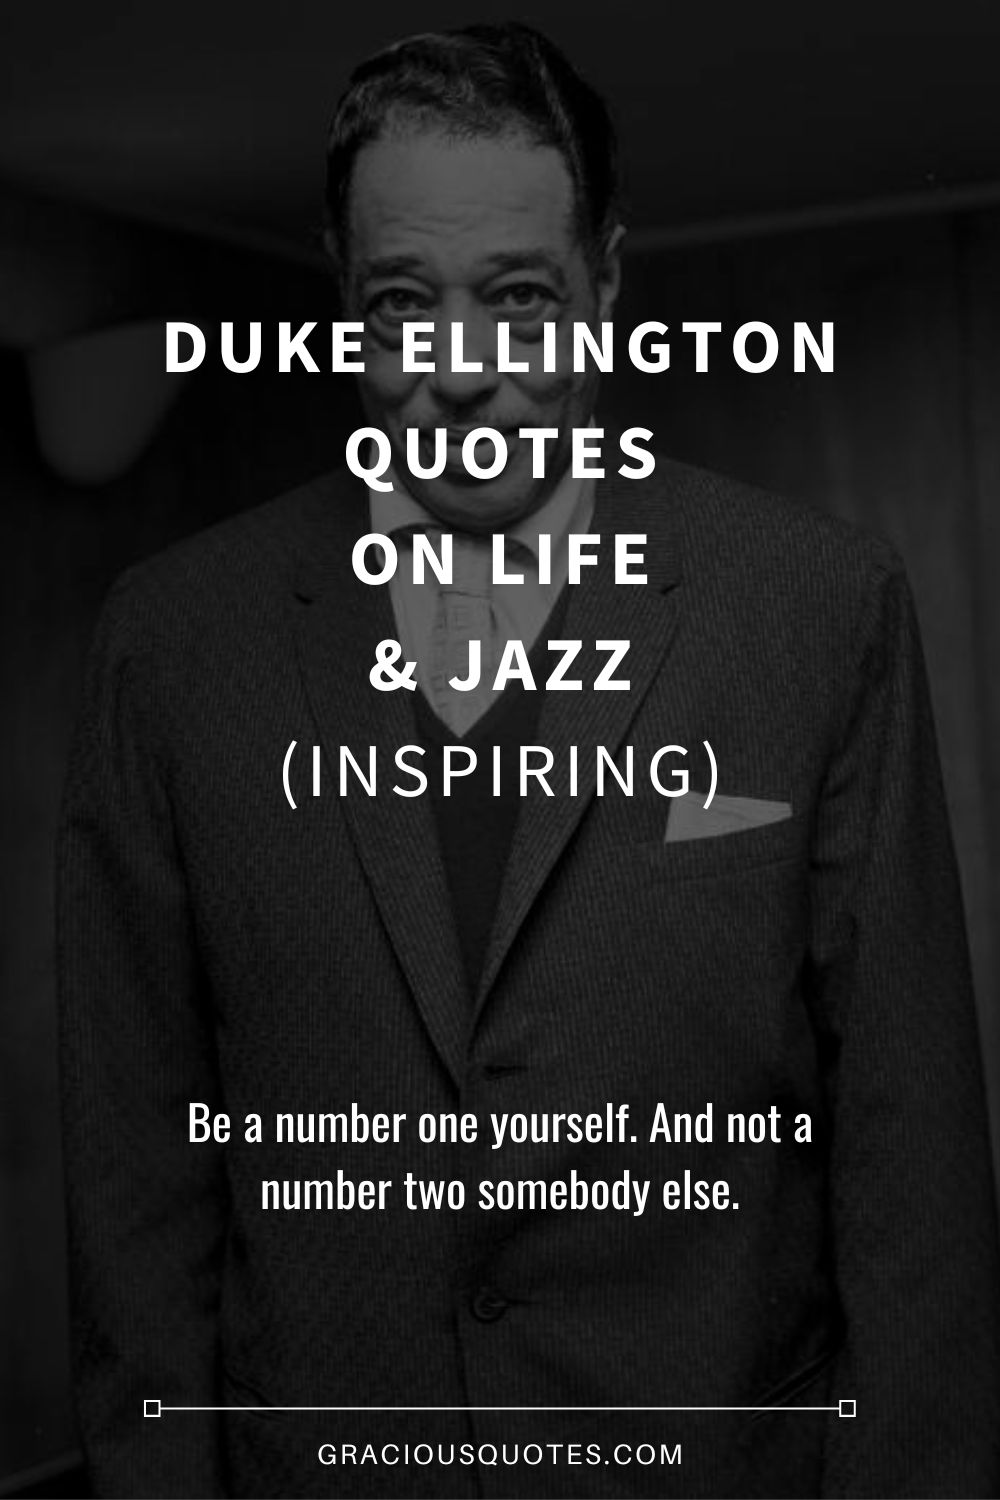 Duke Ellington Quotes on Life & Jazz (INSPIRING) - Gracious Quotes